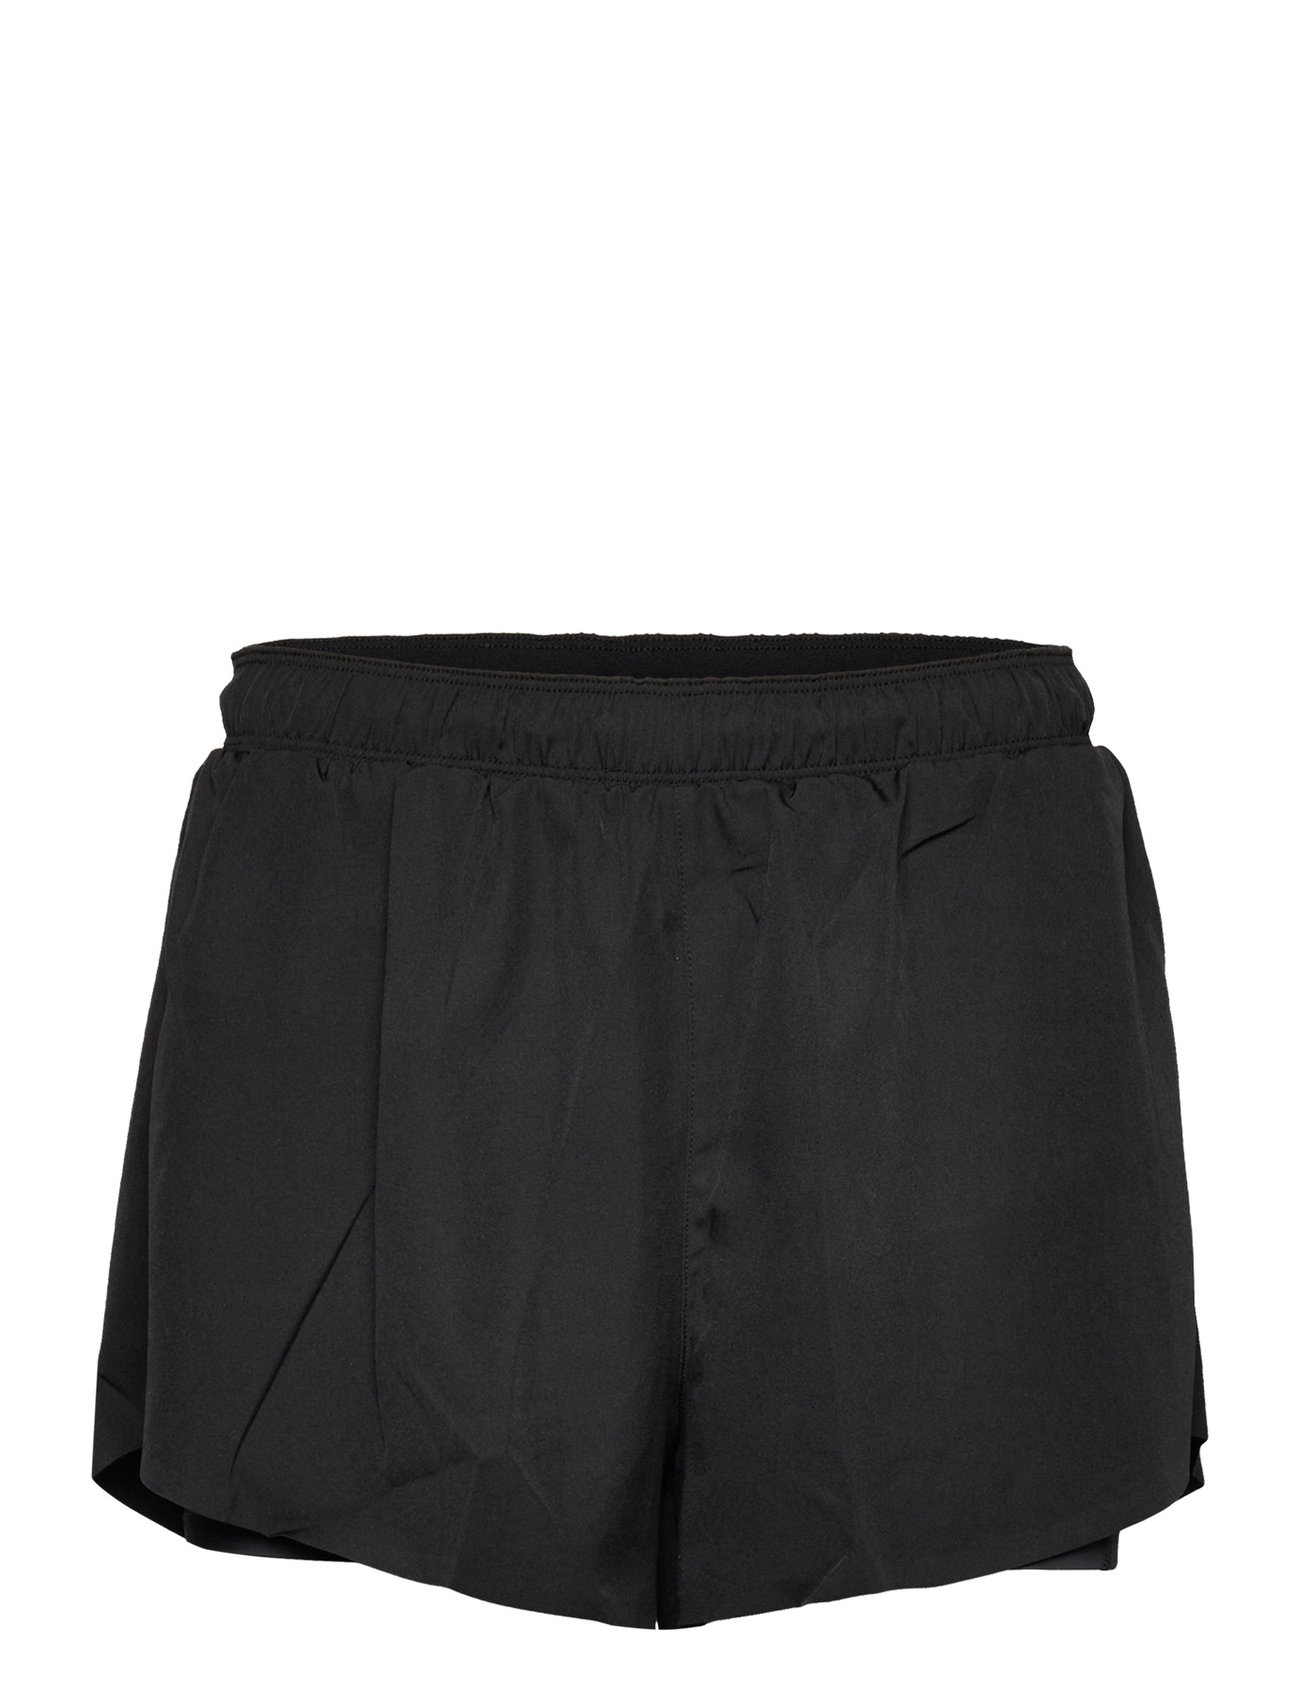 Röhnisch Bounce Shorts - Shorts